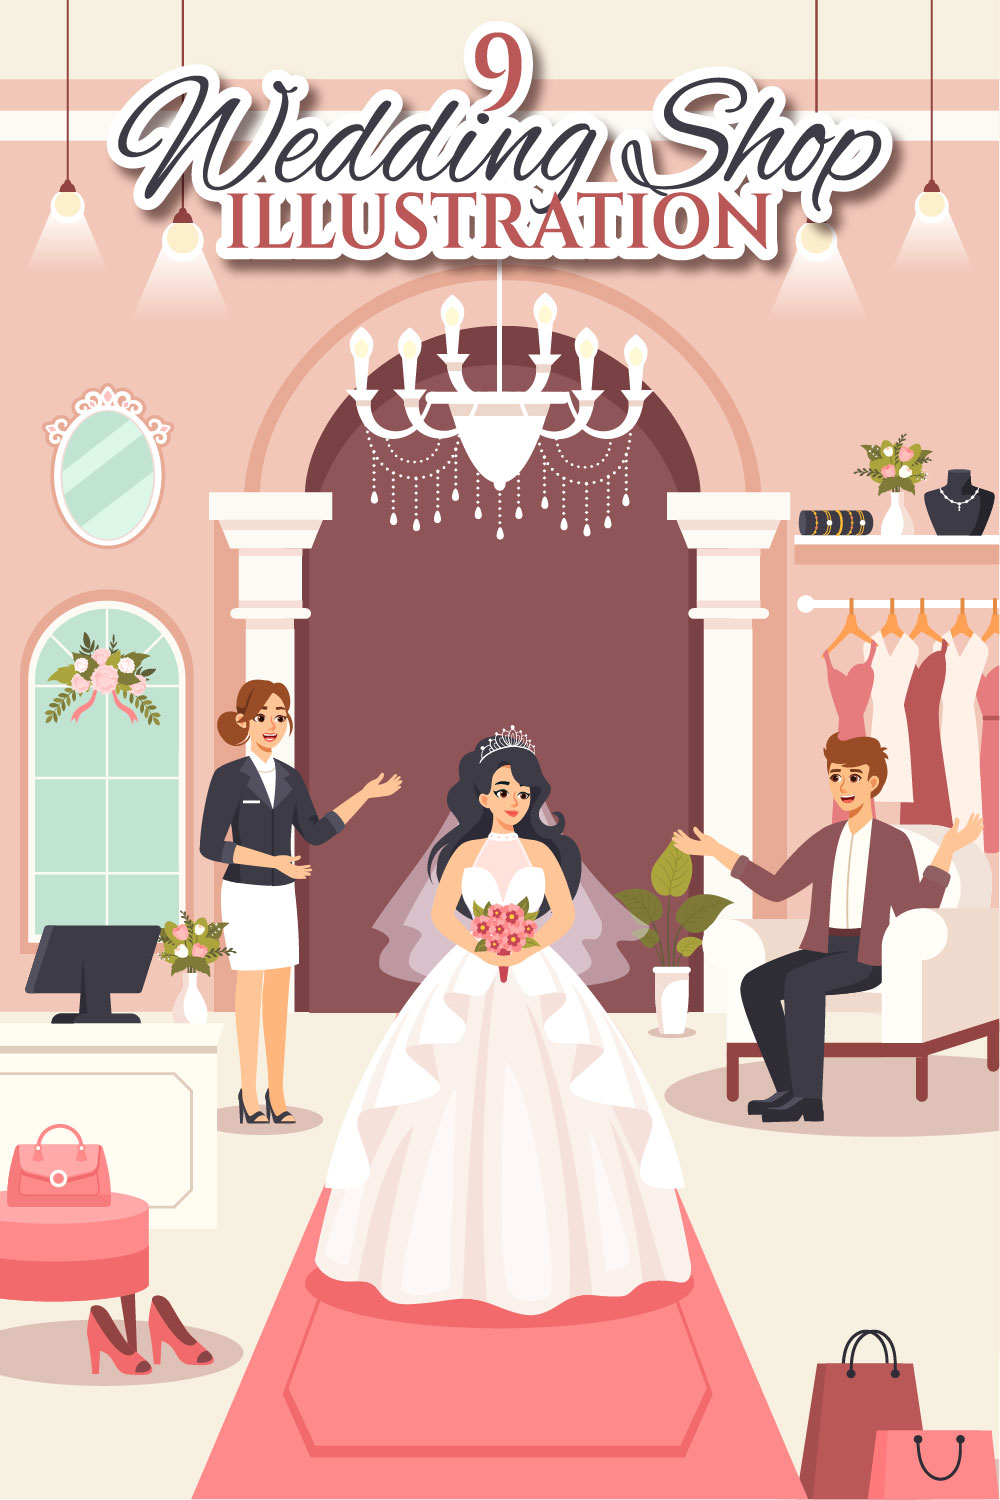 9 Wedding Shop Illustration pinterest preview image.